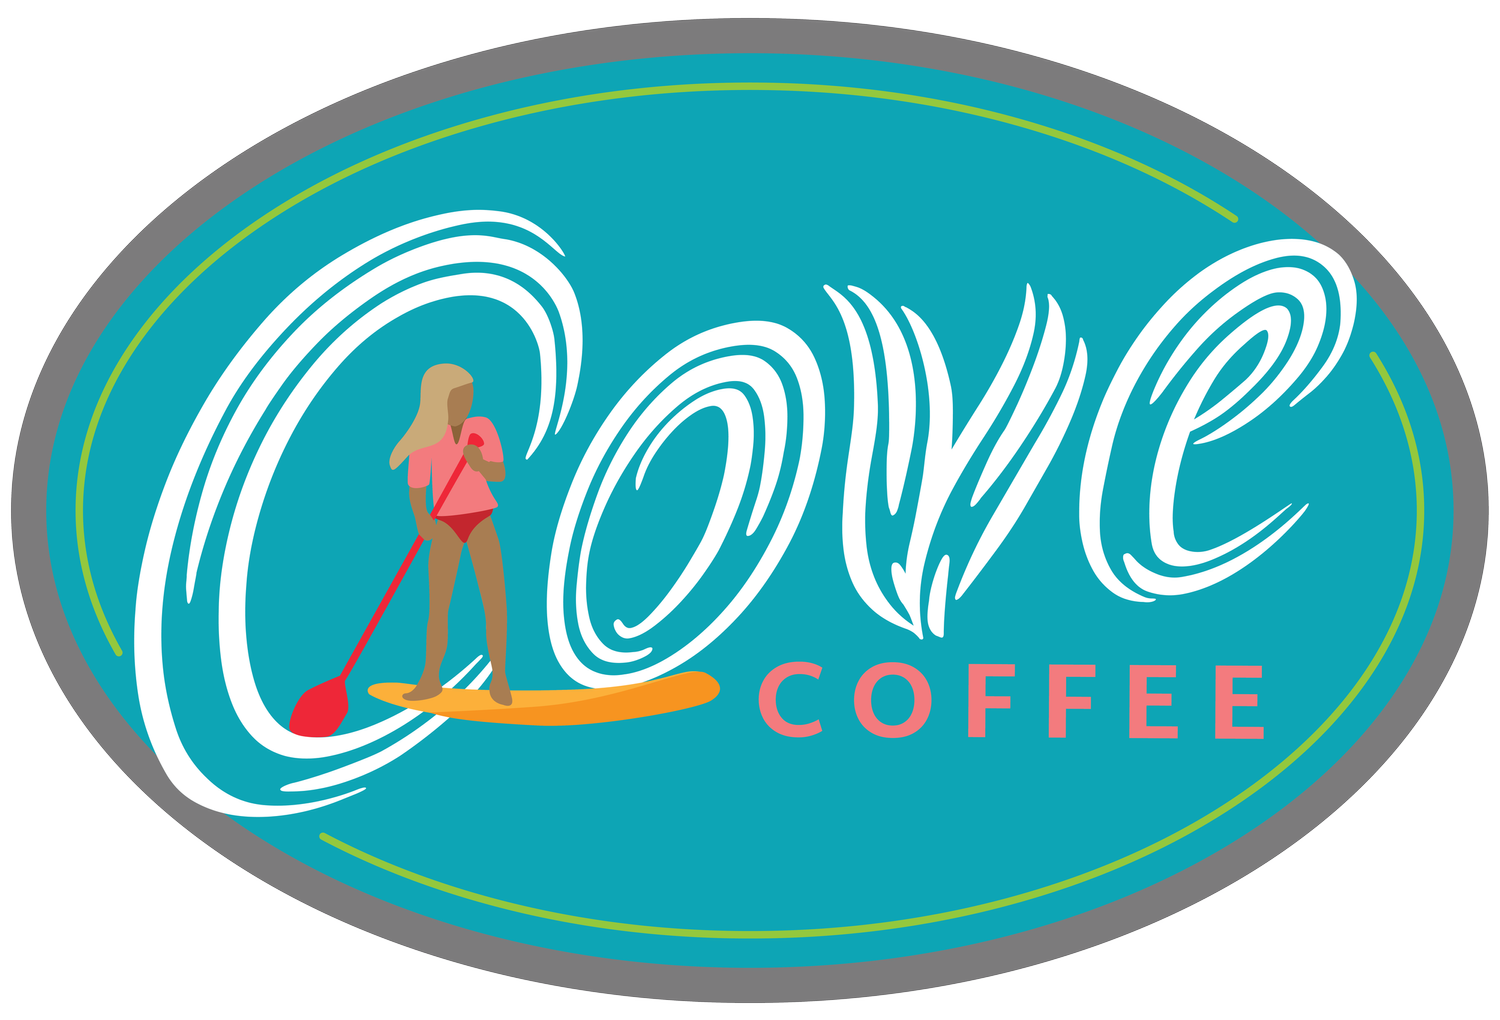 Cove Coffee 